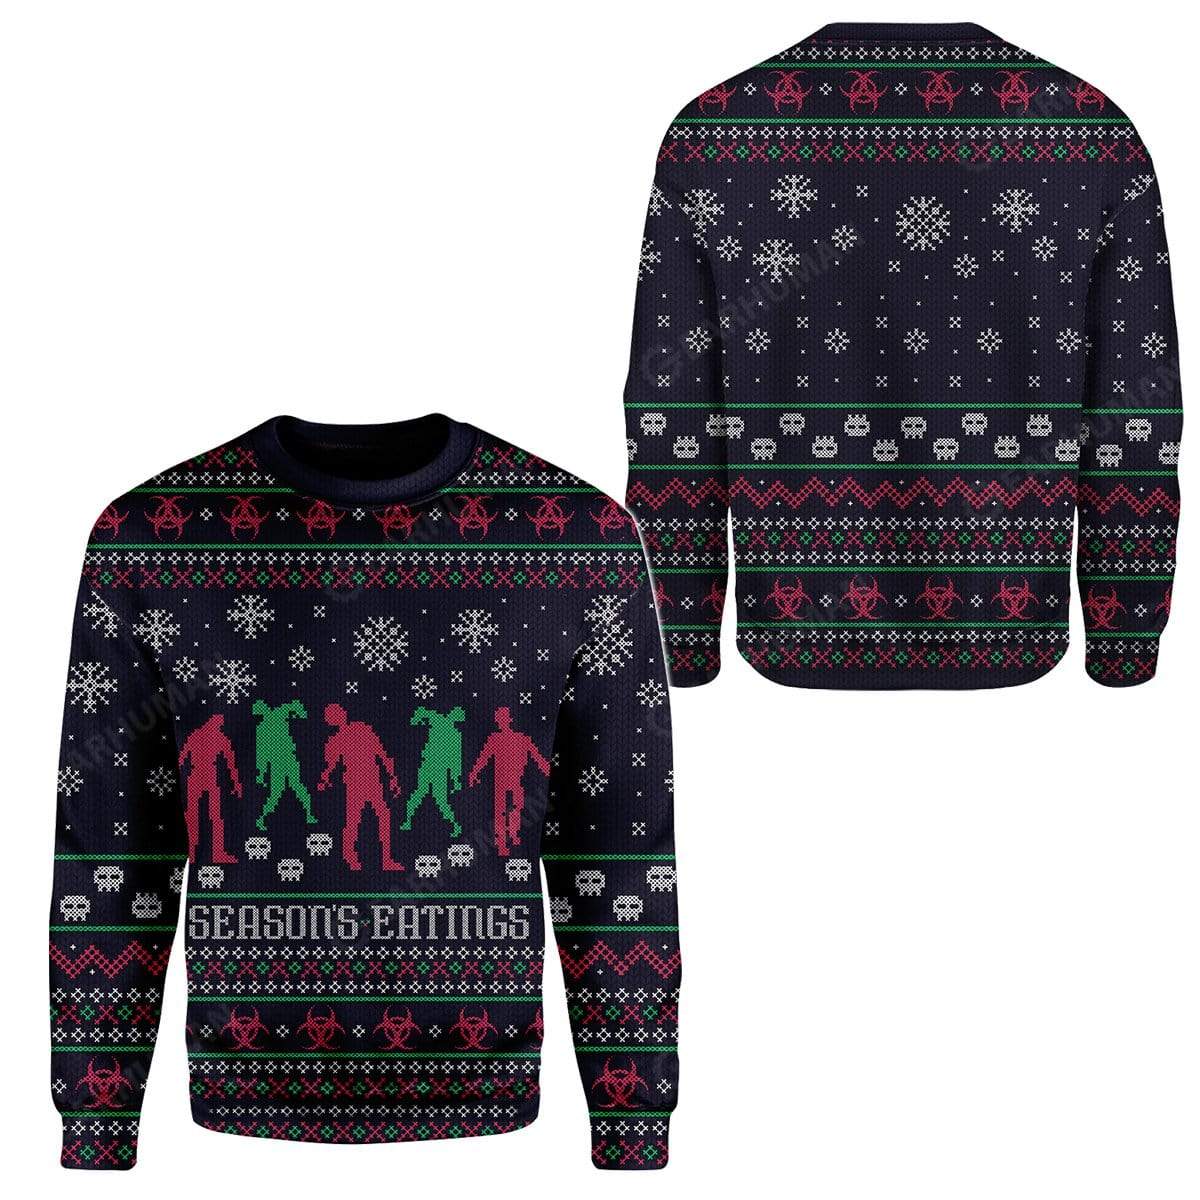 Ugly Season's Eatings Custom Sweater Apparel HD-TT14111912 Ugly Christmas Sweater 